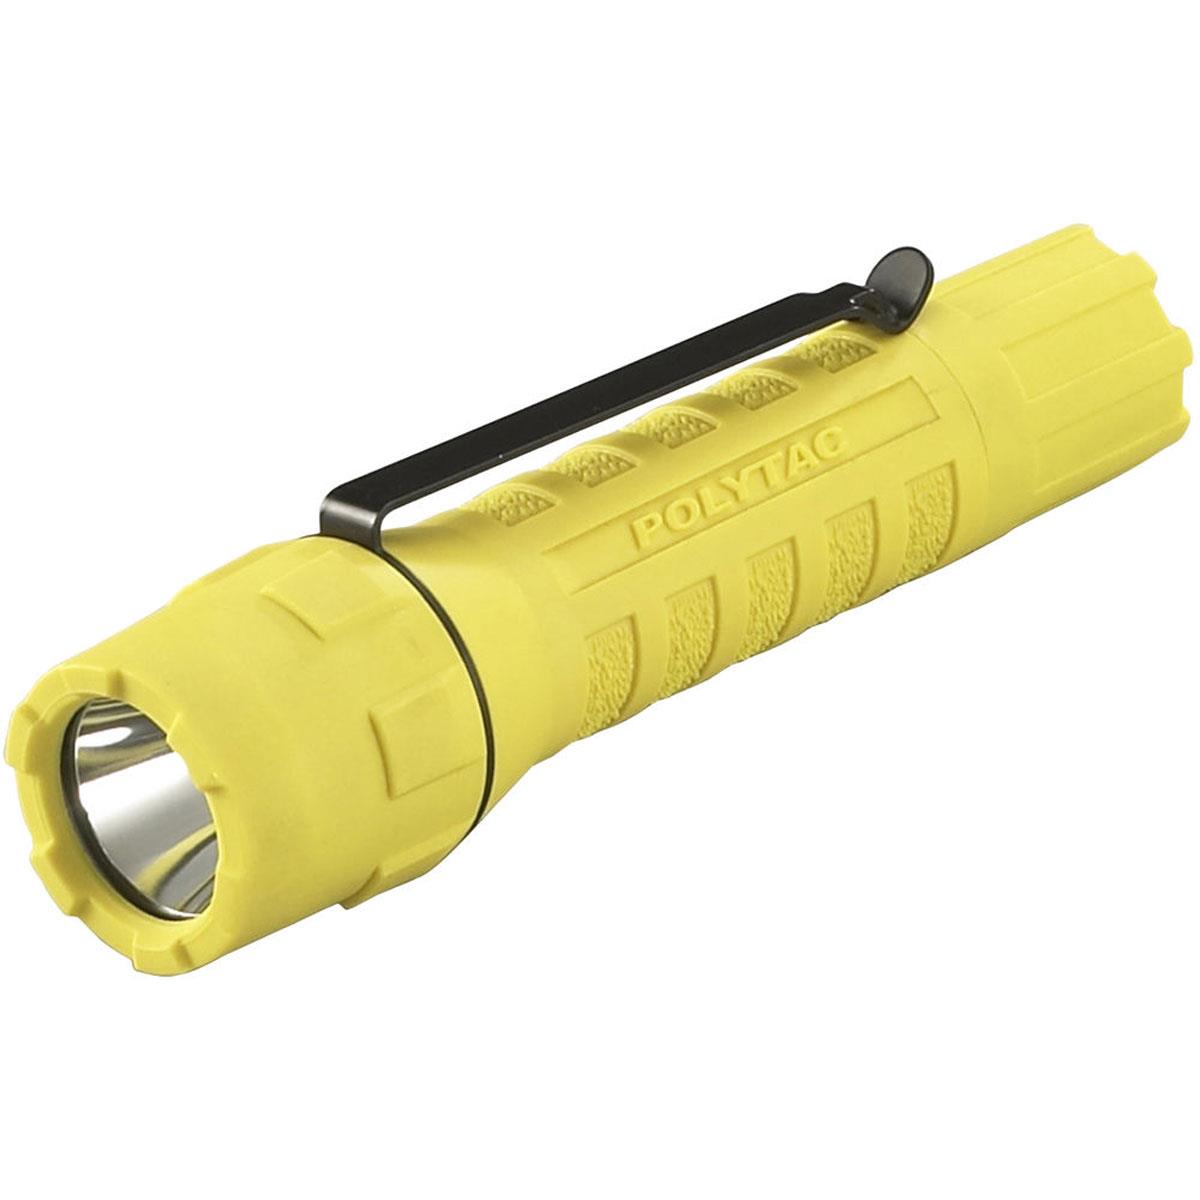 

Streamlight PolyTac C4 LED Flashlight 120 Lumens Yellow